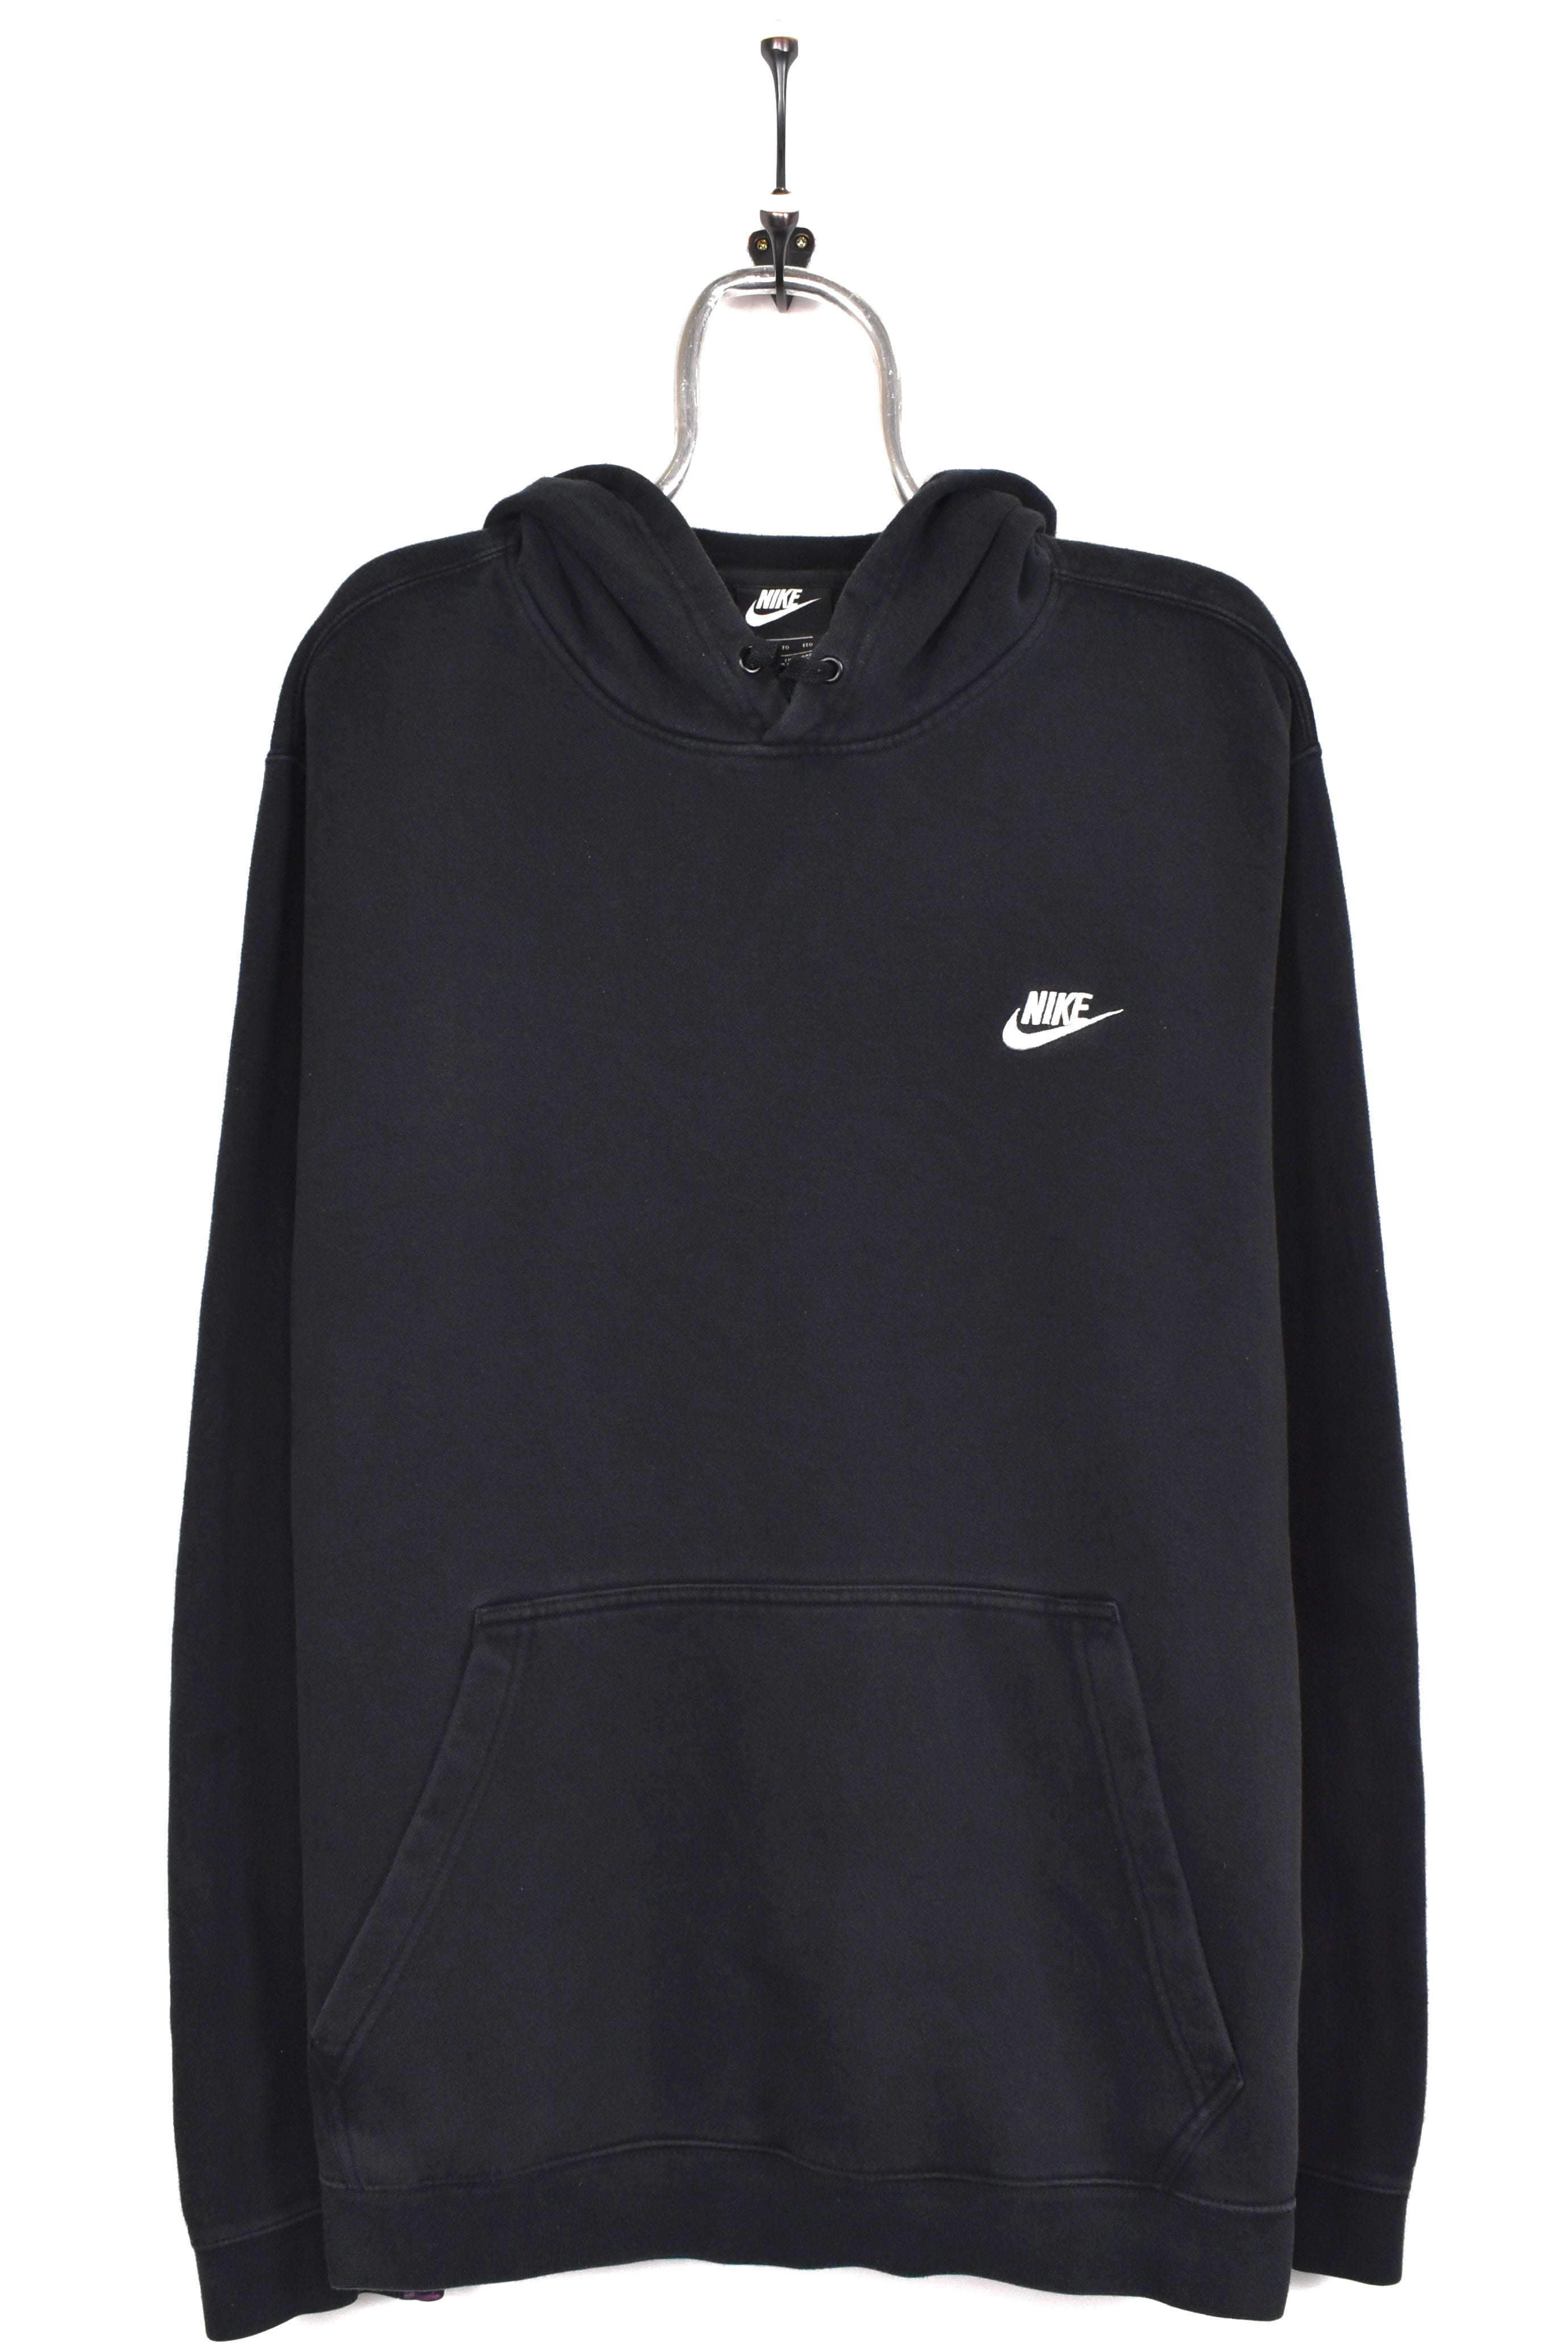 Vintage Nike hoodie, black embroidered sweatshirt - AU XXL